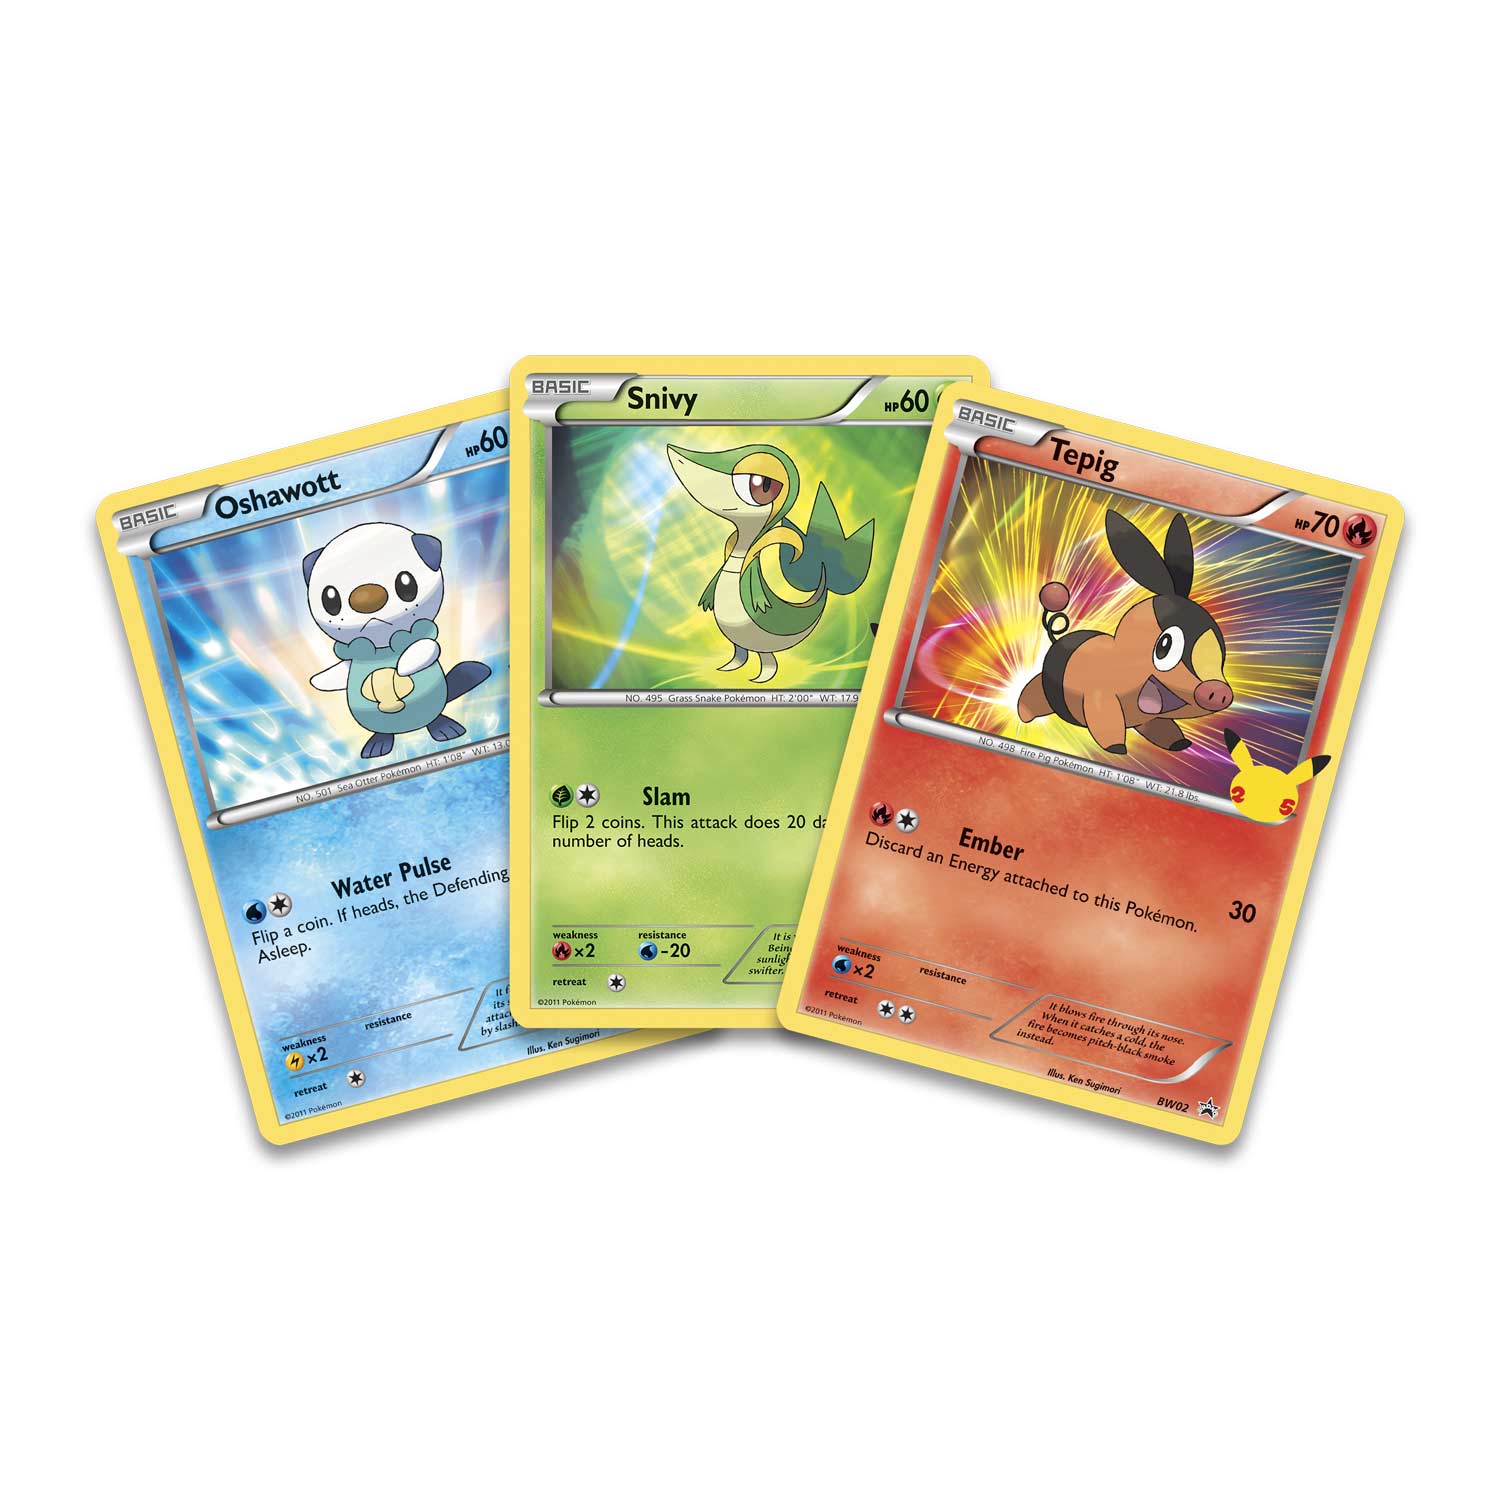 Pokémon TCG: First Partner Collector’s Booster Pack (June - Unova)